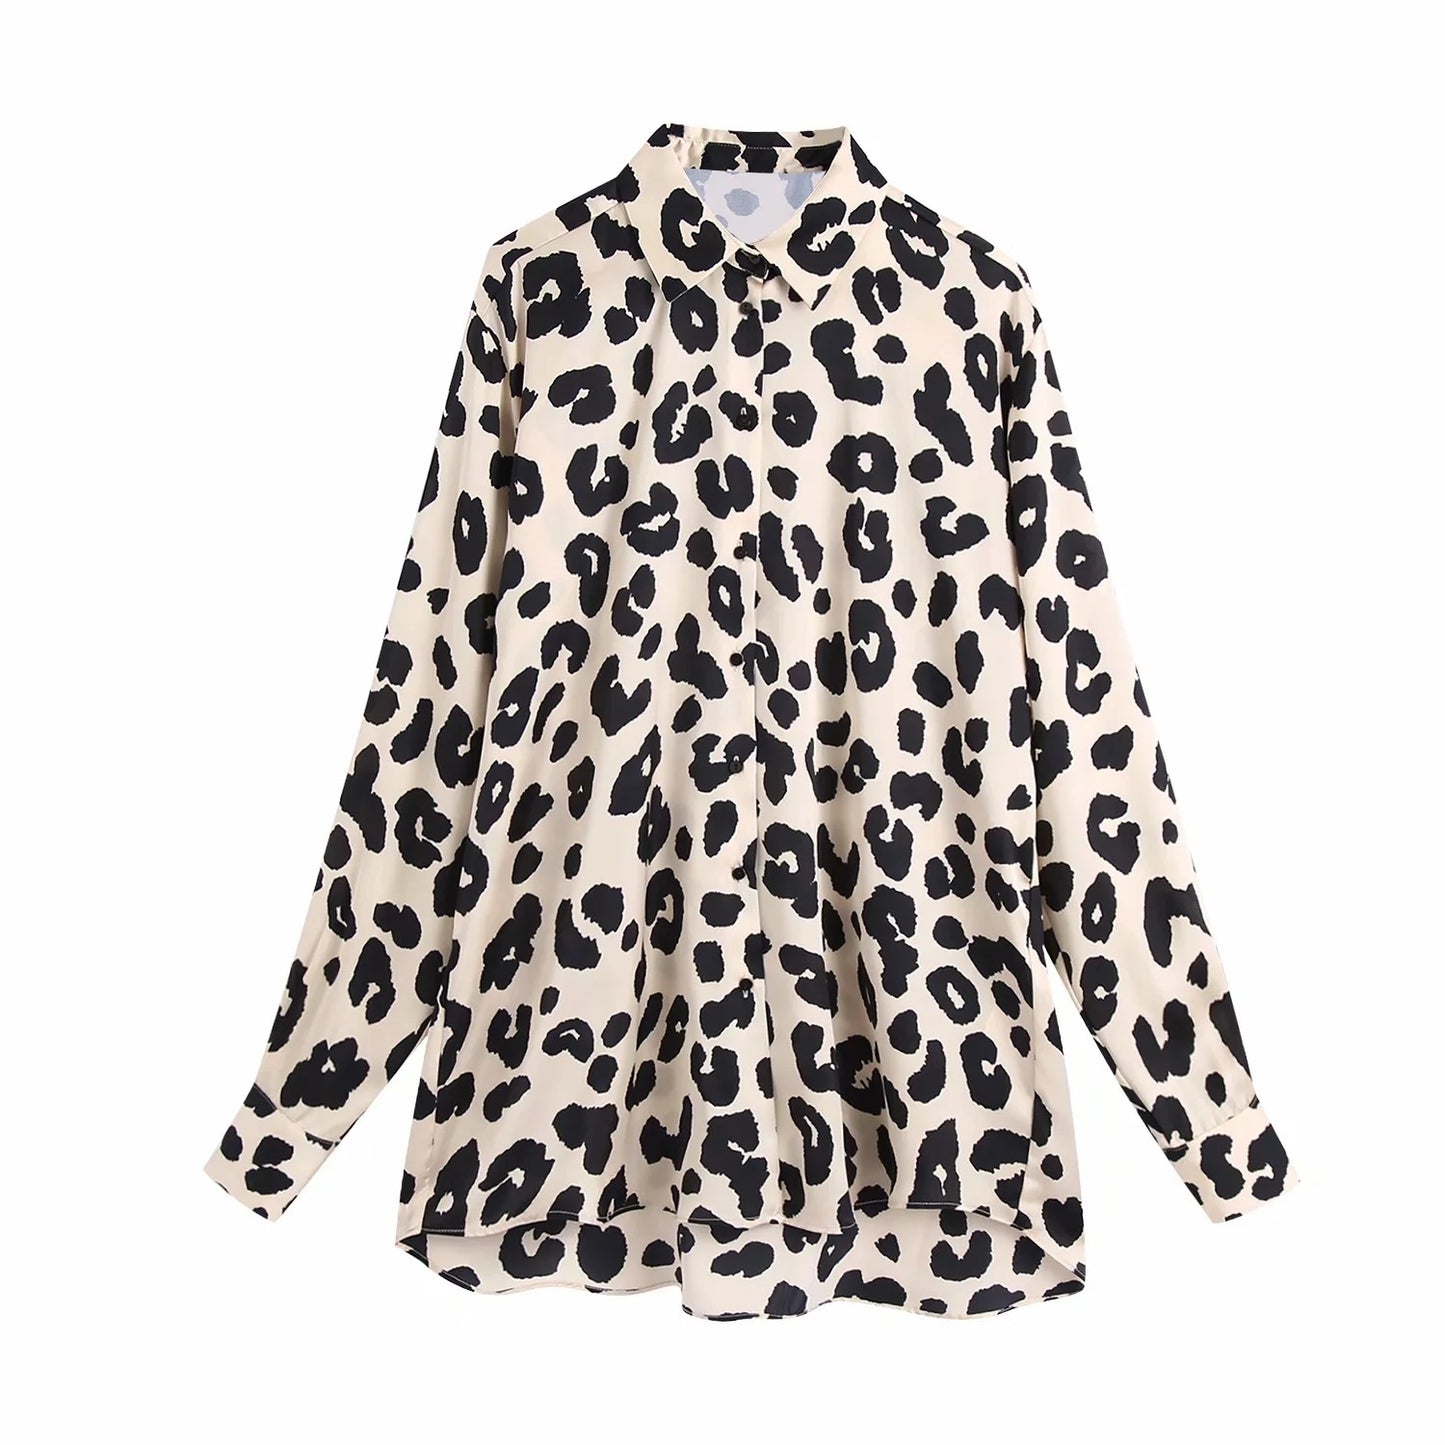 Tropical Comfort, Cheetah Chic: Relaxed fit and a fierce cheetah print make this beach shirt a must-have